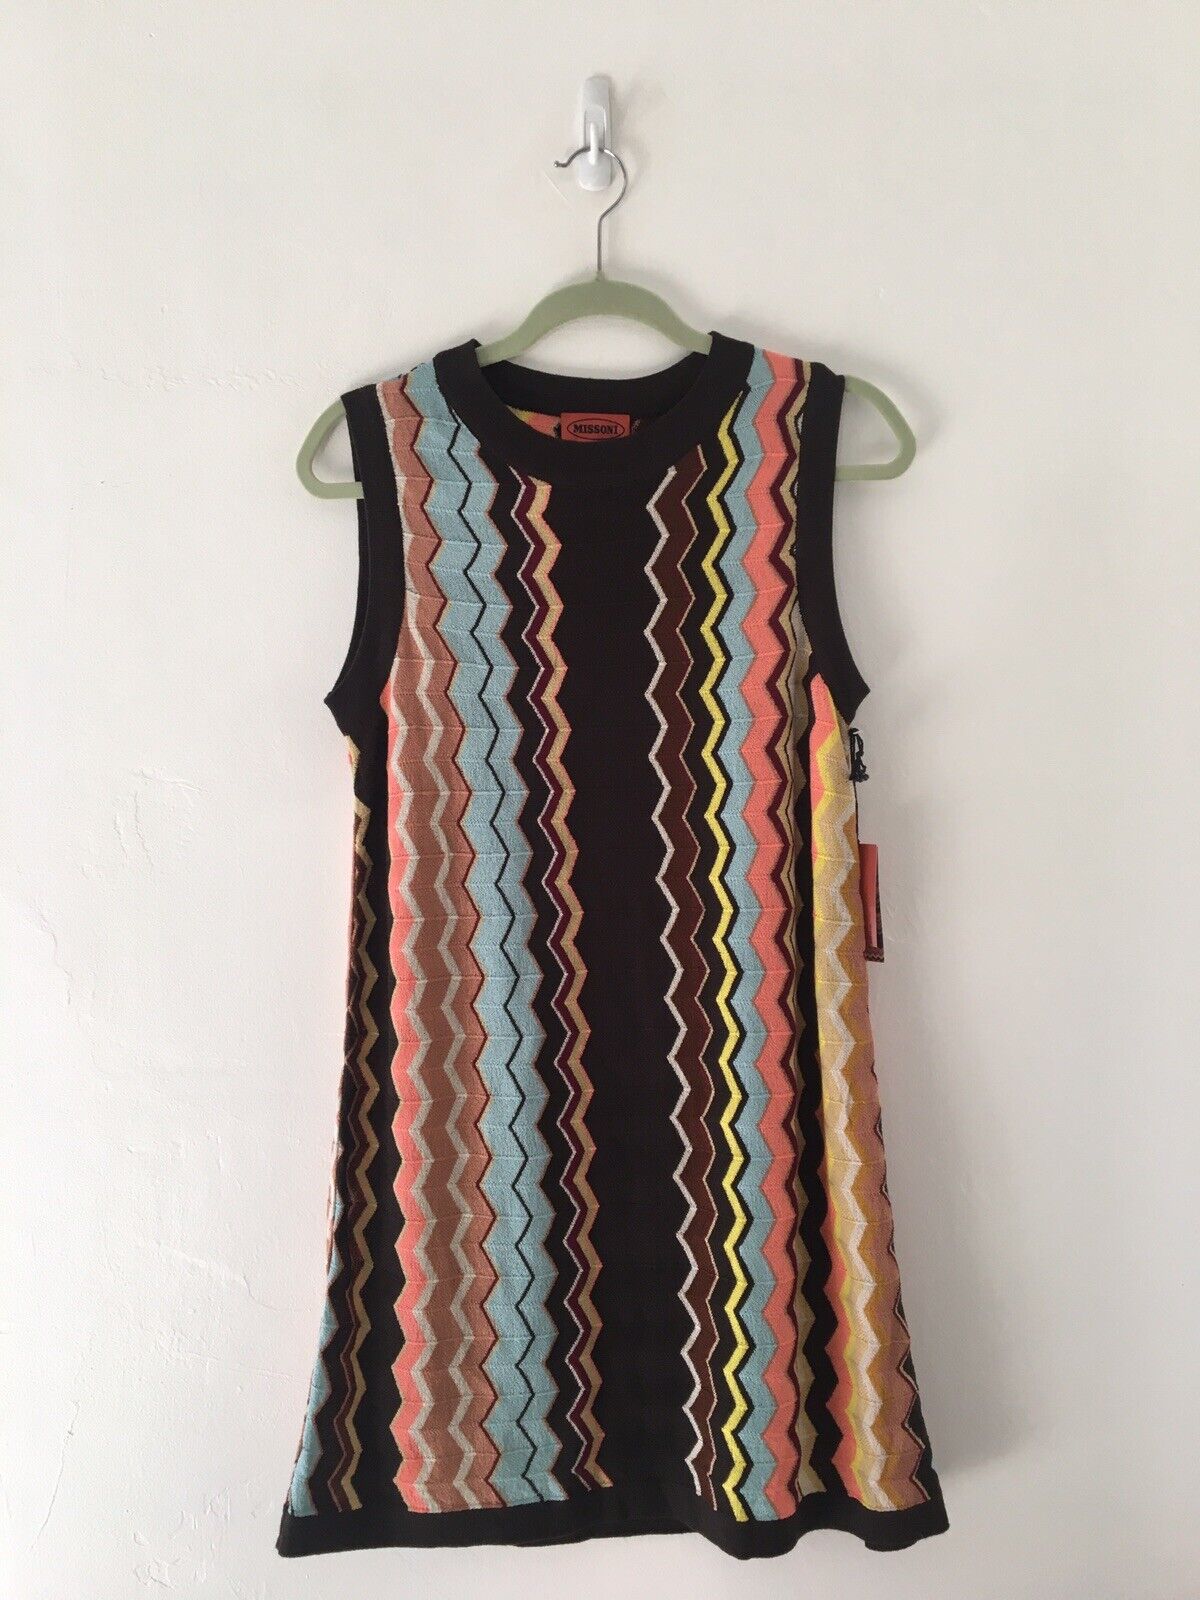 Nwt Missoni Target Sweater Dress Medium • Zigzag • Chevron • Colore